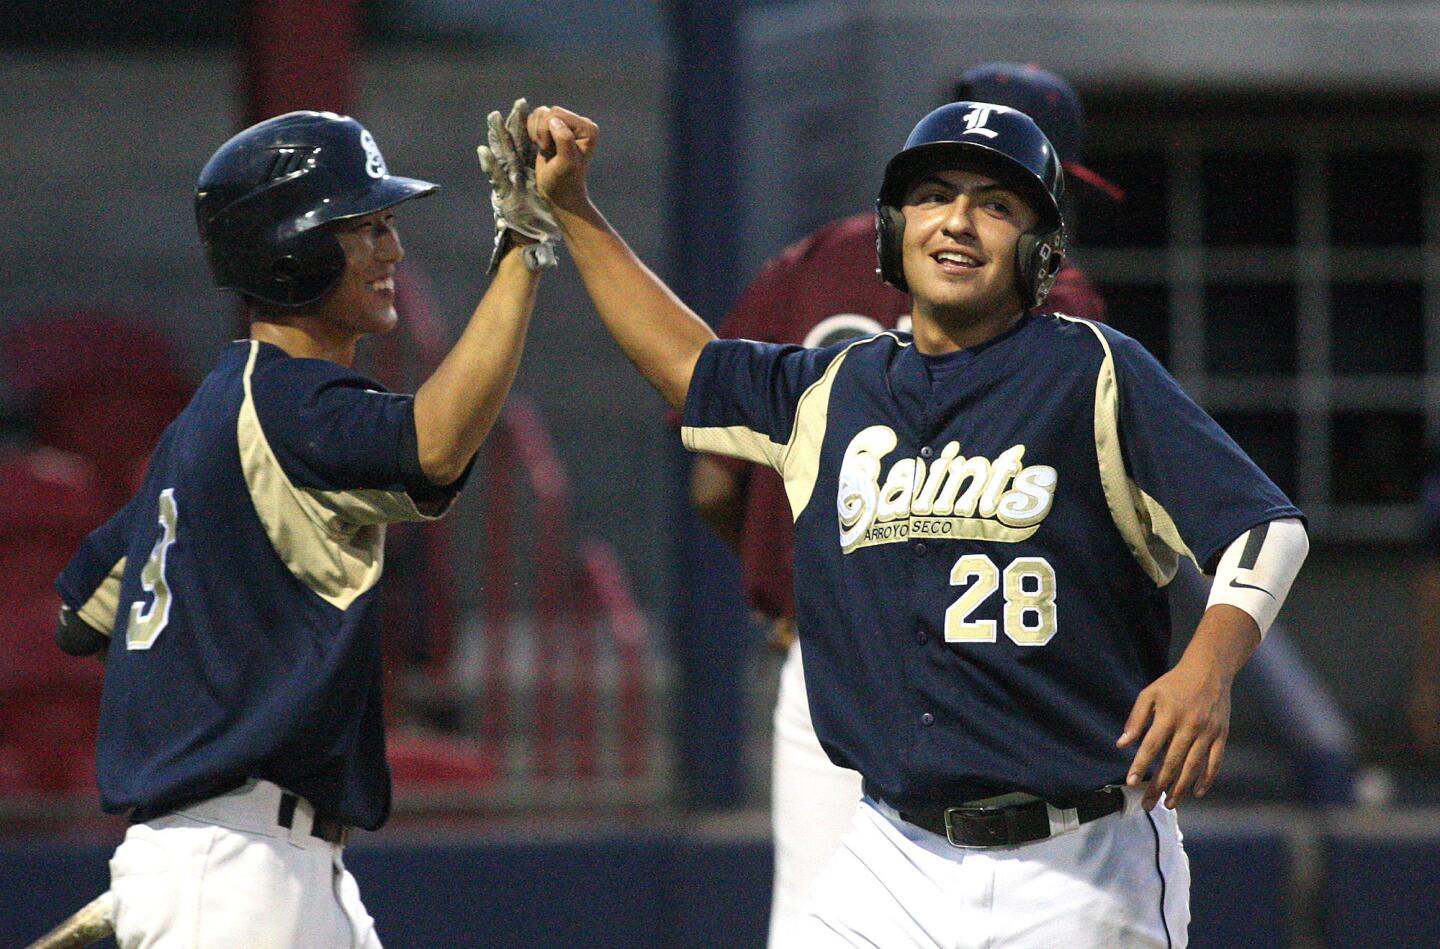 Photo Gallery: Arroyo Seco Saints vs. Urban Youth Academy championship baseball